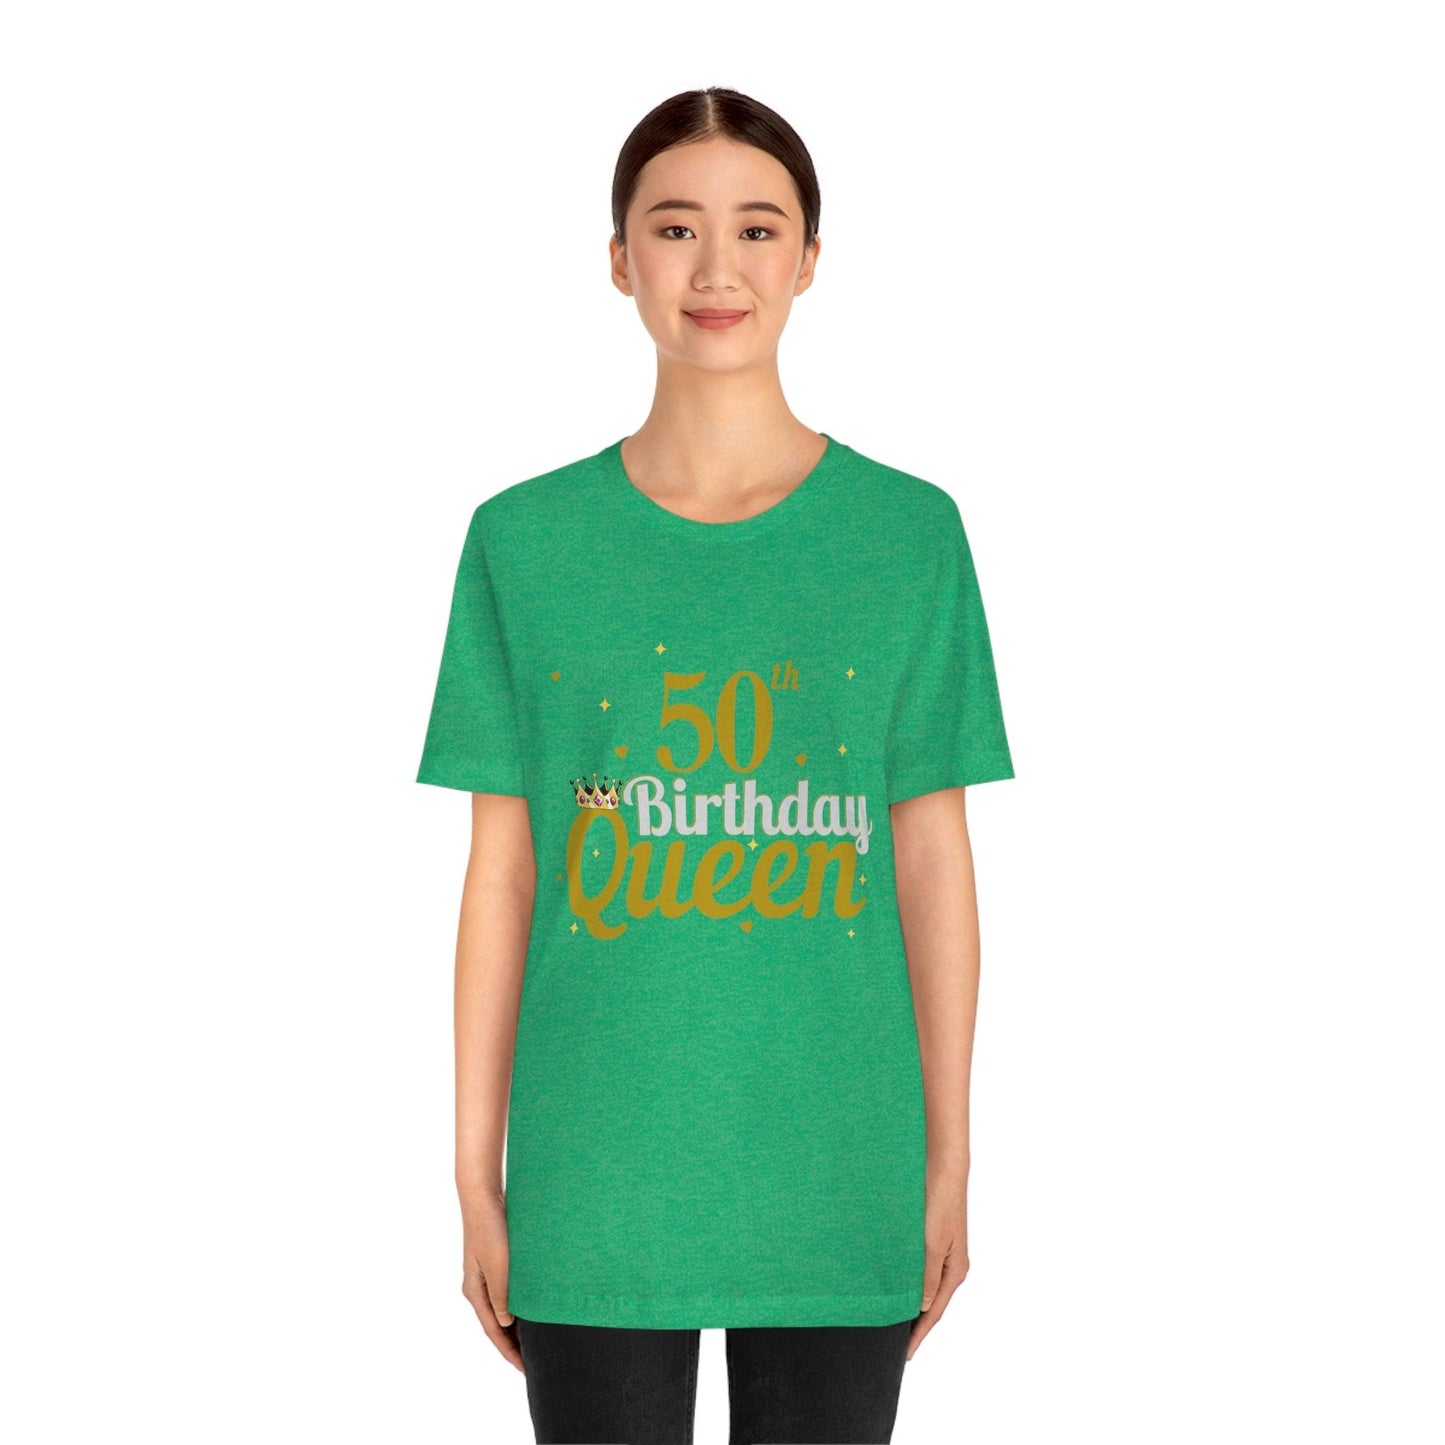 50th birthday queen shirt, birthday shirt, gift for her - Giftsmojo